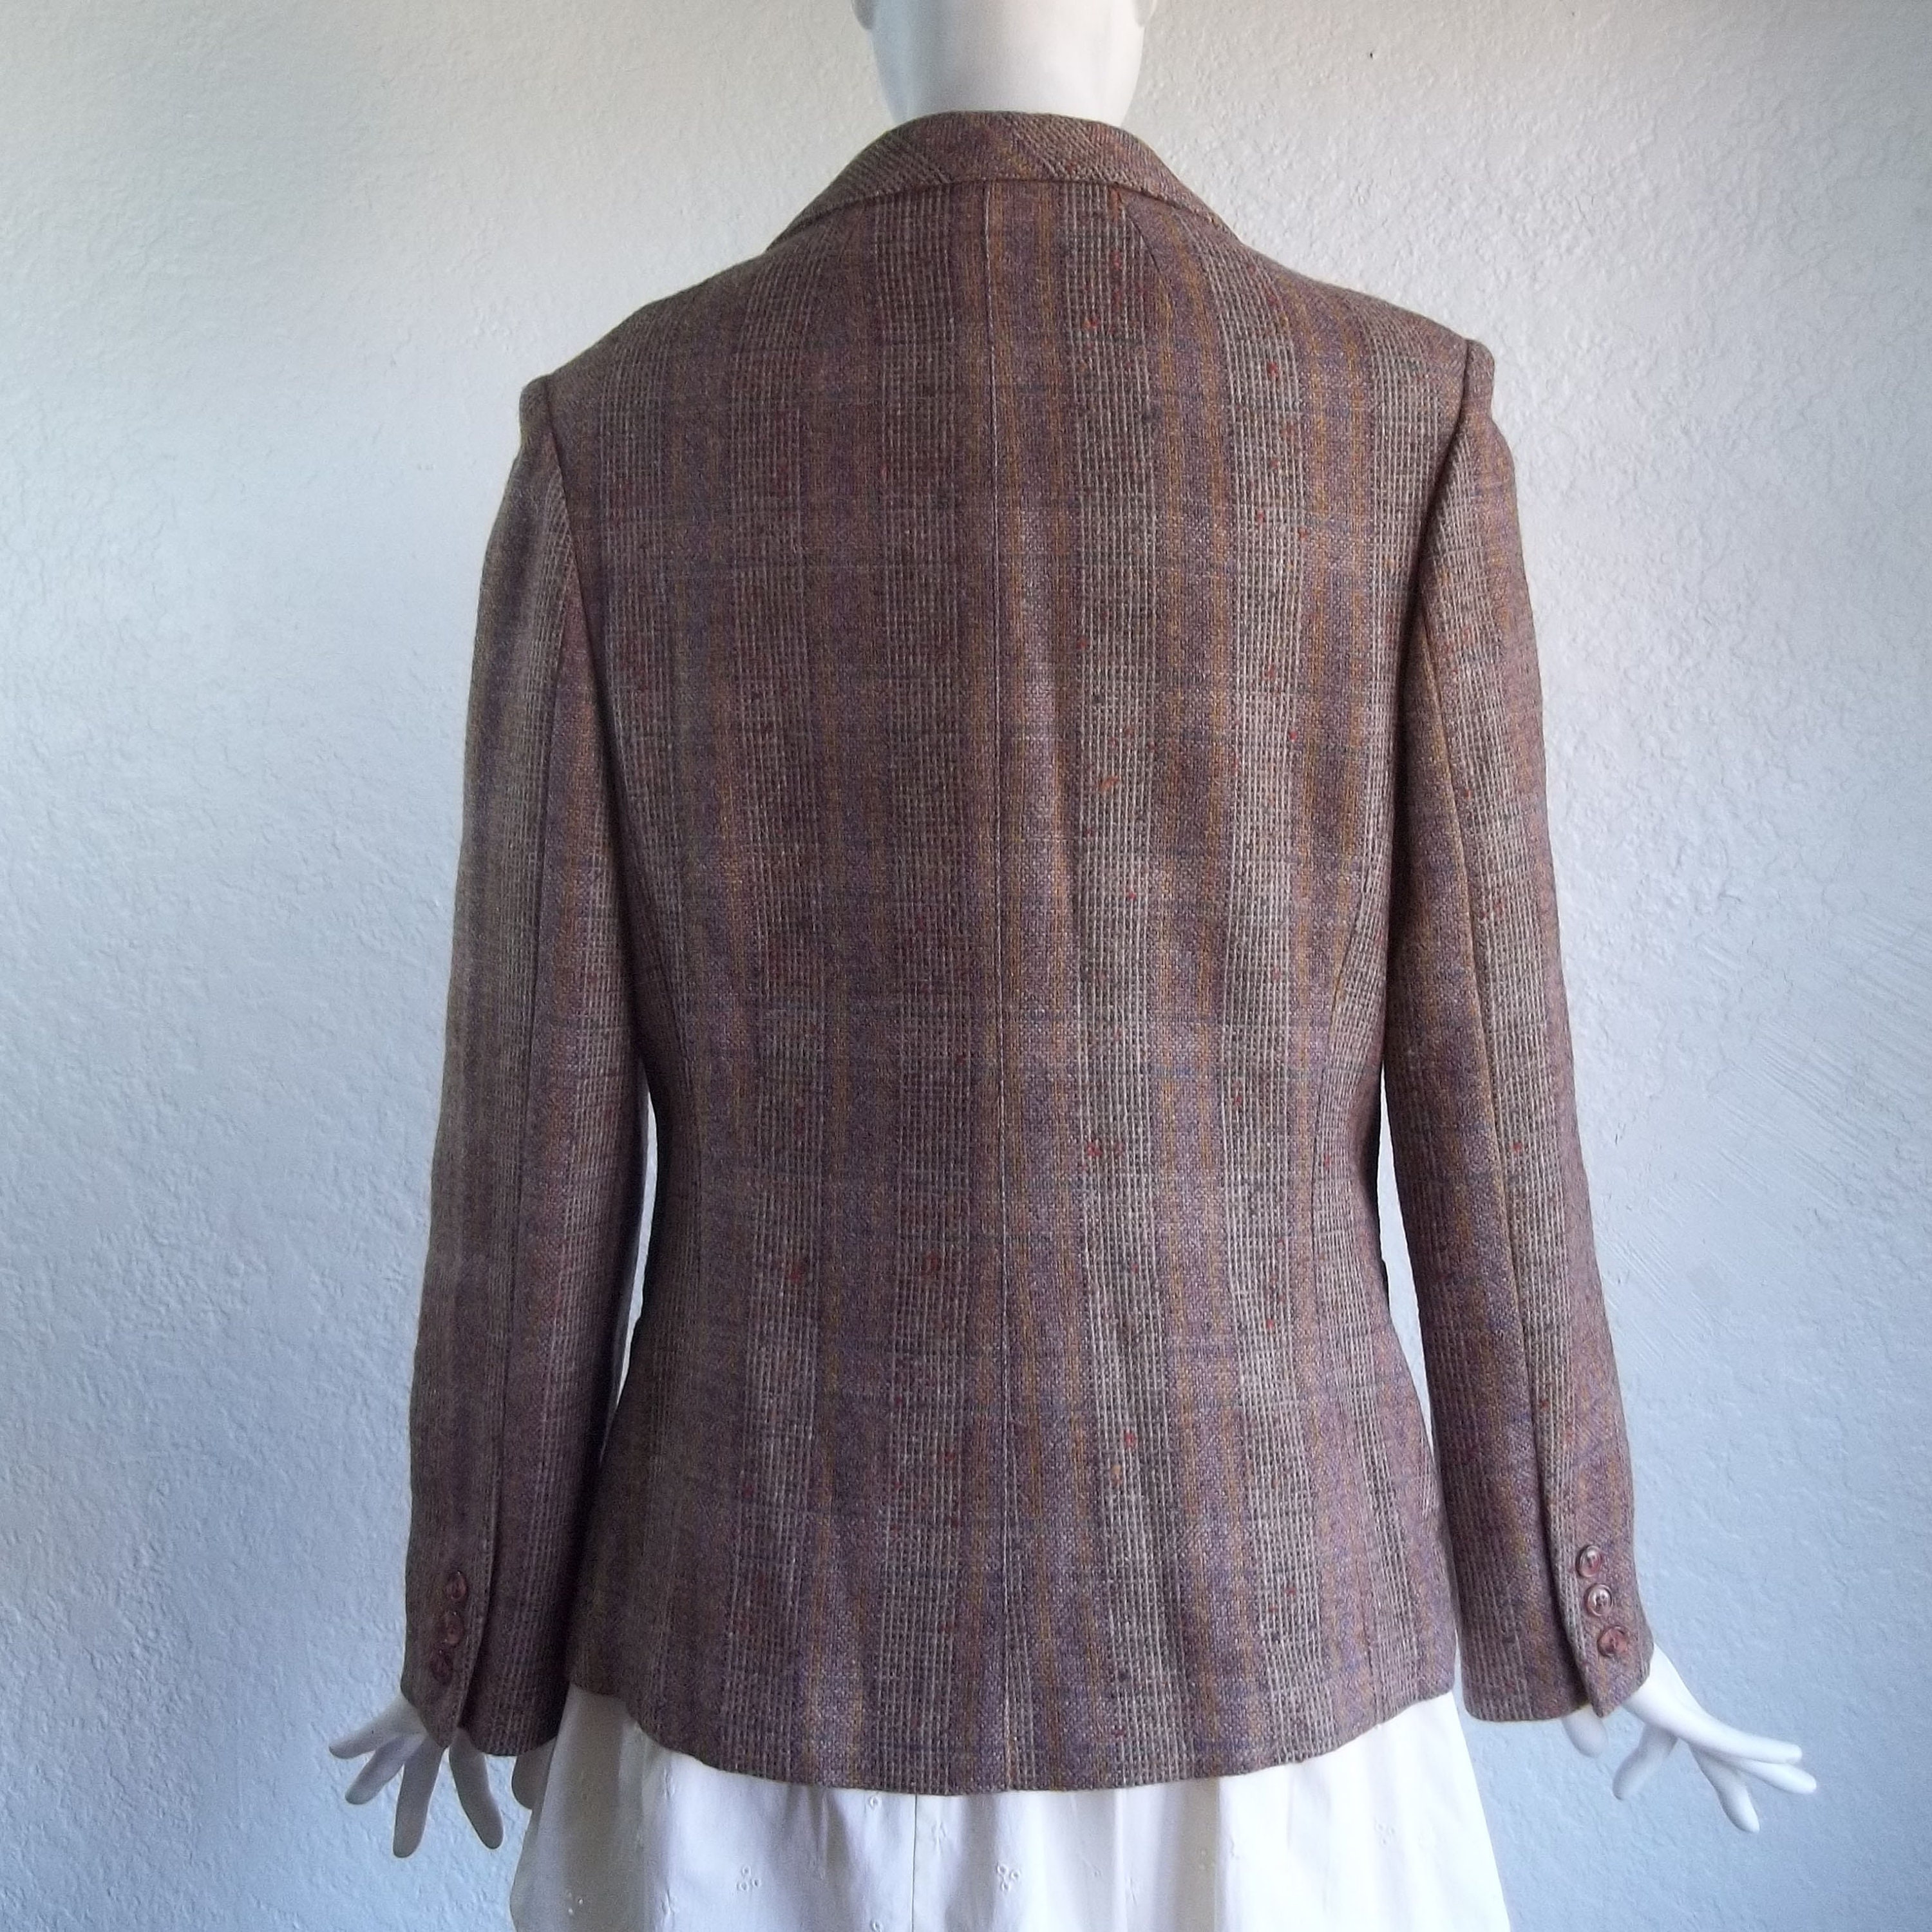 Vintage 70s Preppy Dark Academia Plaid Wool Tweed Boyfriend | Etsy